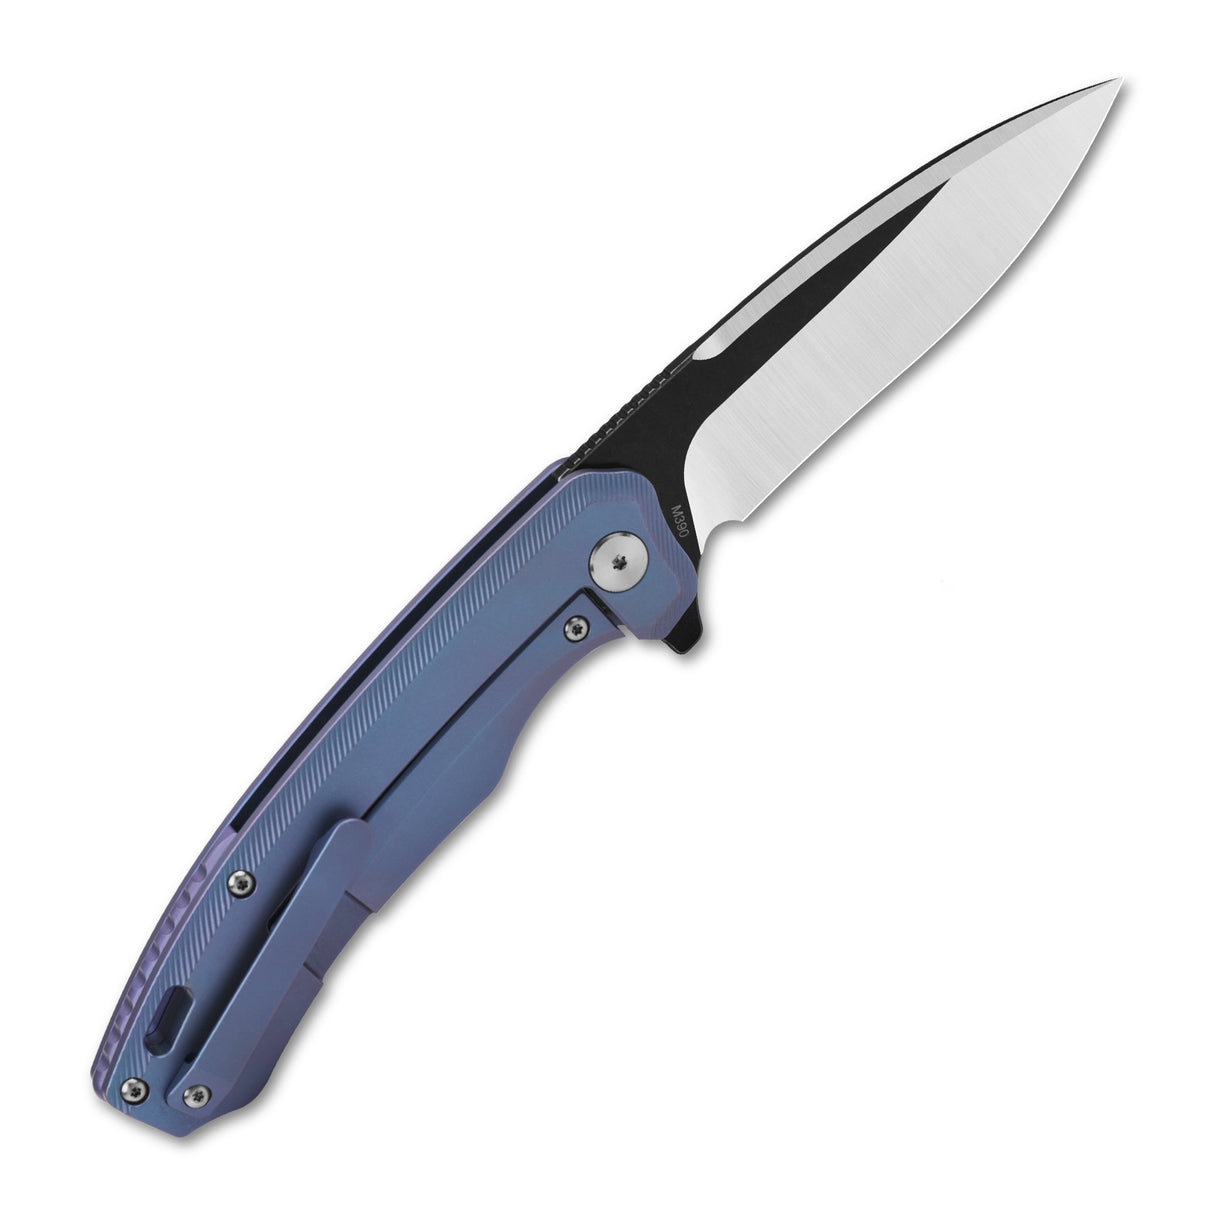 QSP Woodpecker Frame Lock Pocket Knife Böhler M390 Blade  Blue Titanium Handle